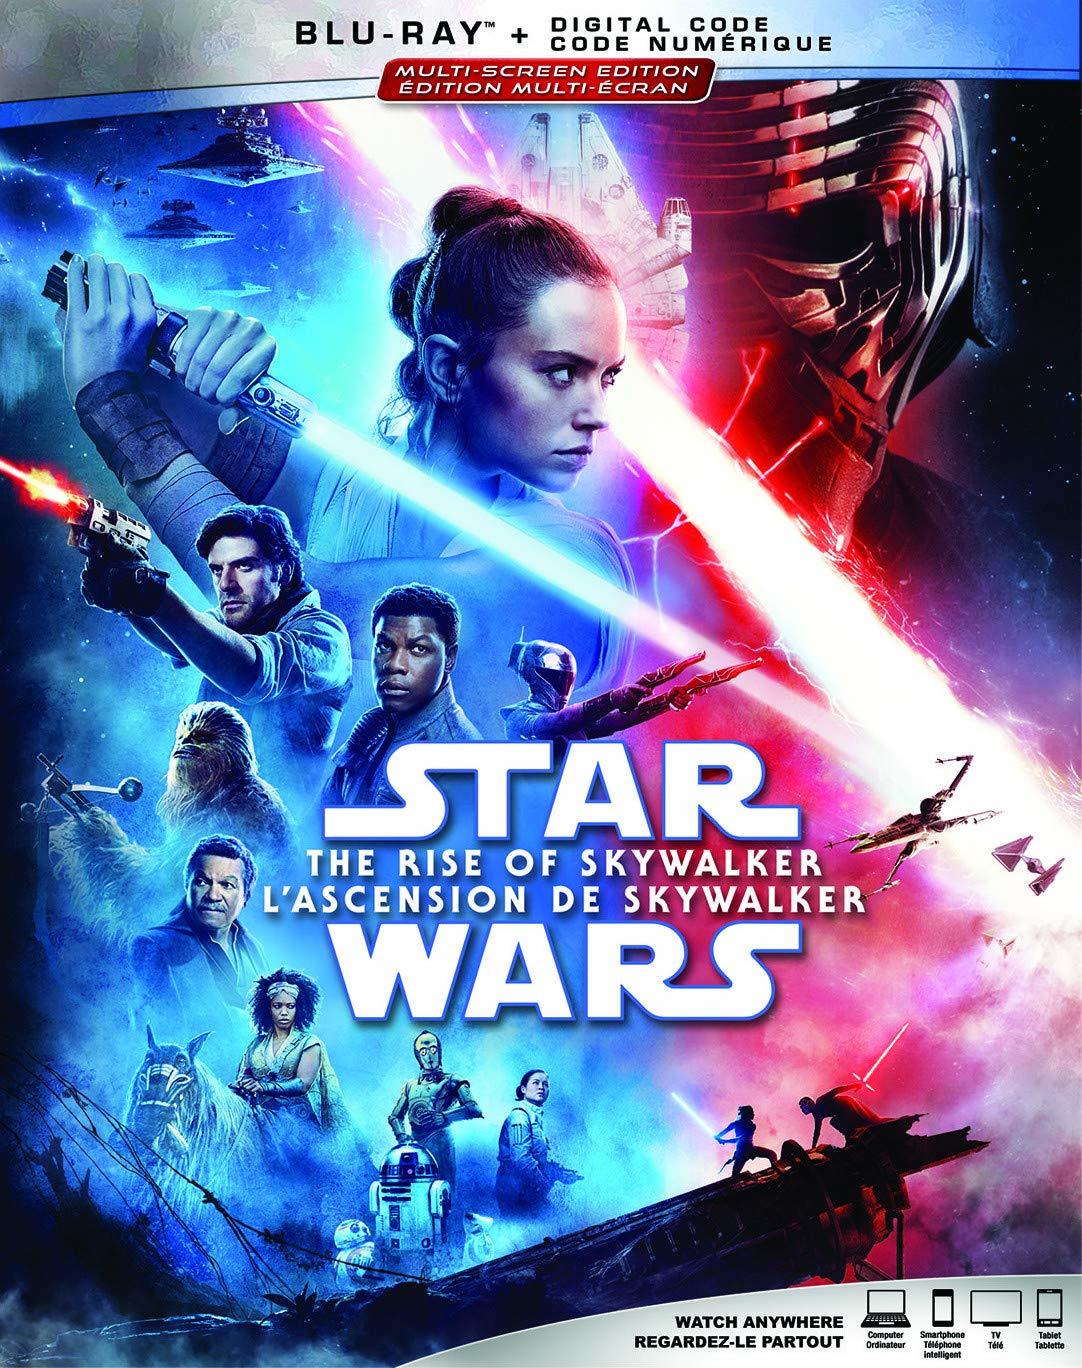 Star Wars: Episode IX - The Rise of Skywalker (2019) Star Wars: El Ascenso de Skywalker (2019) [AC3 5.1 + SUP] [Blu Ray-Rip] 259412_front